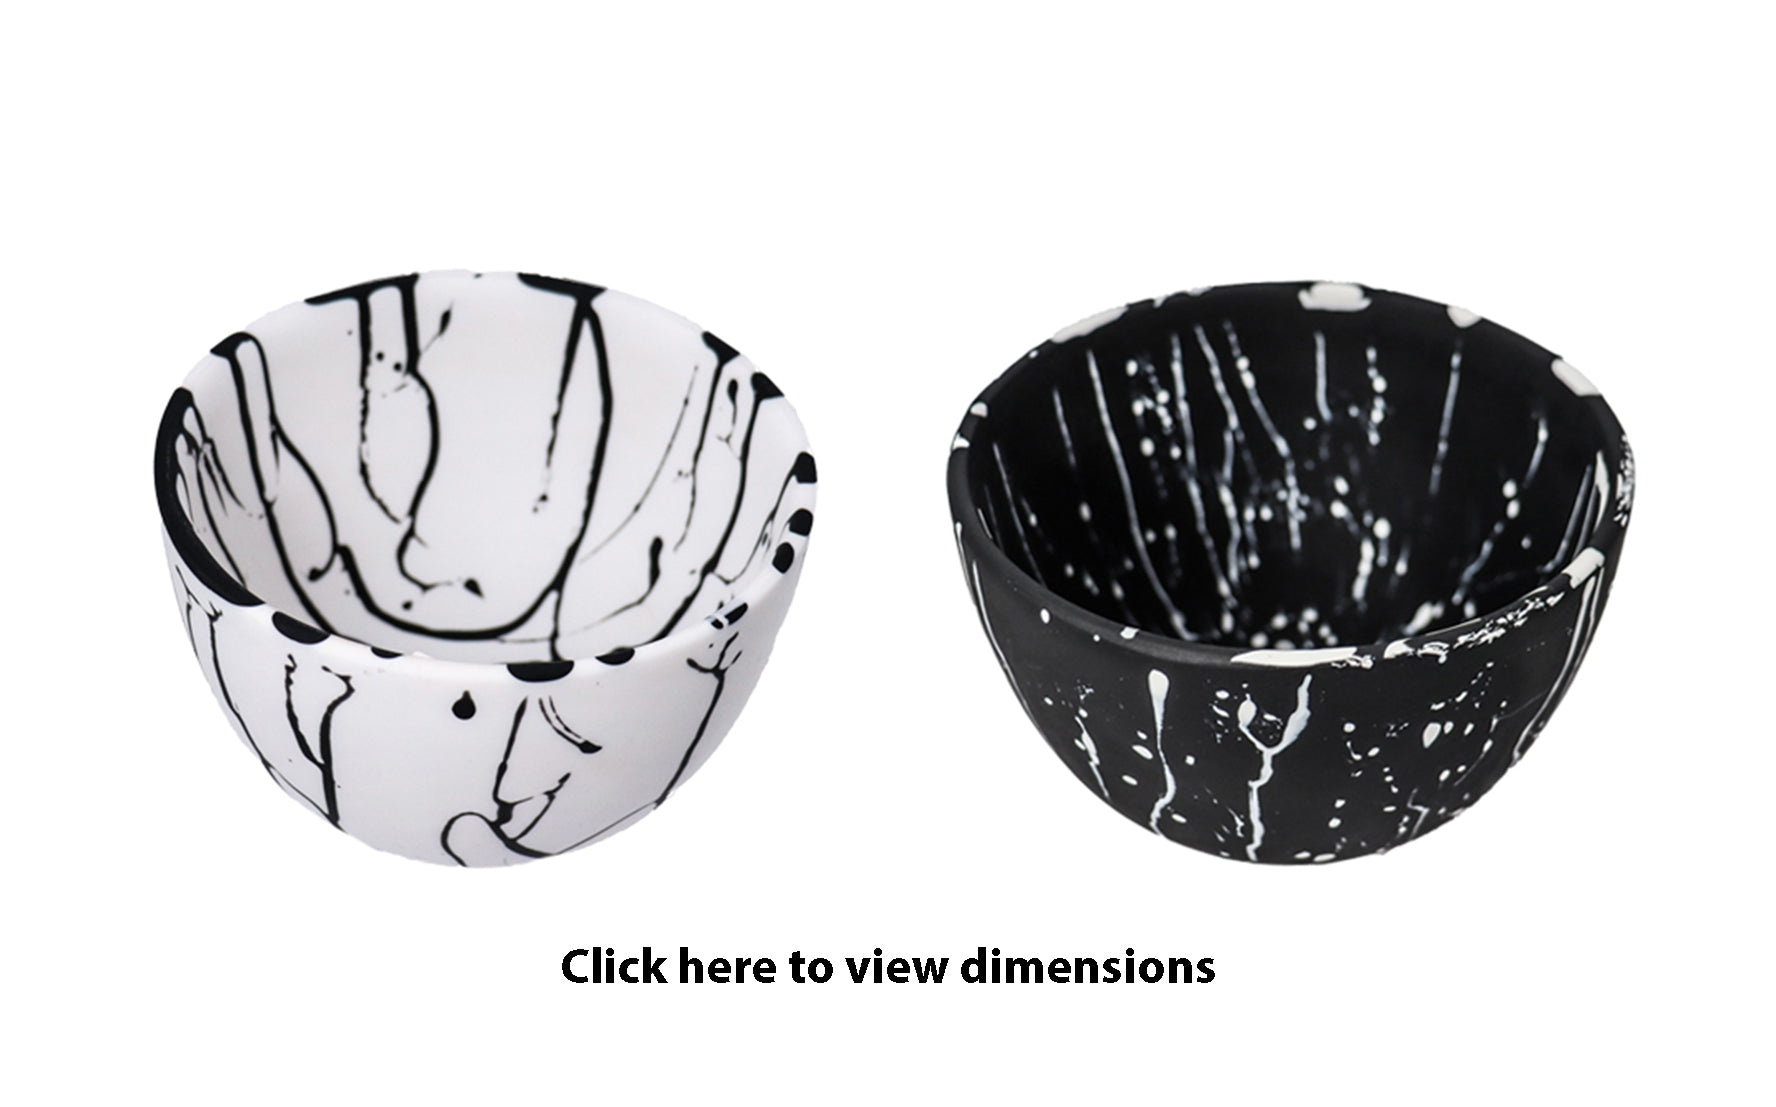 Luxe Medium Deep Bowls, Black & White Splatters